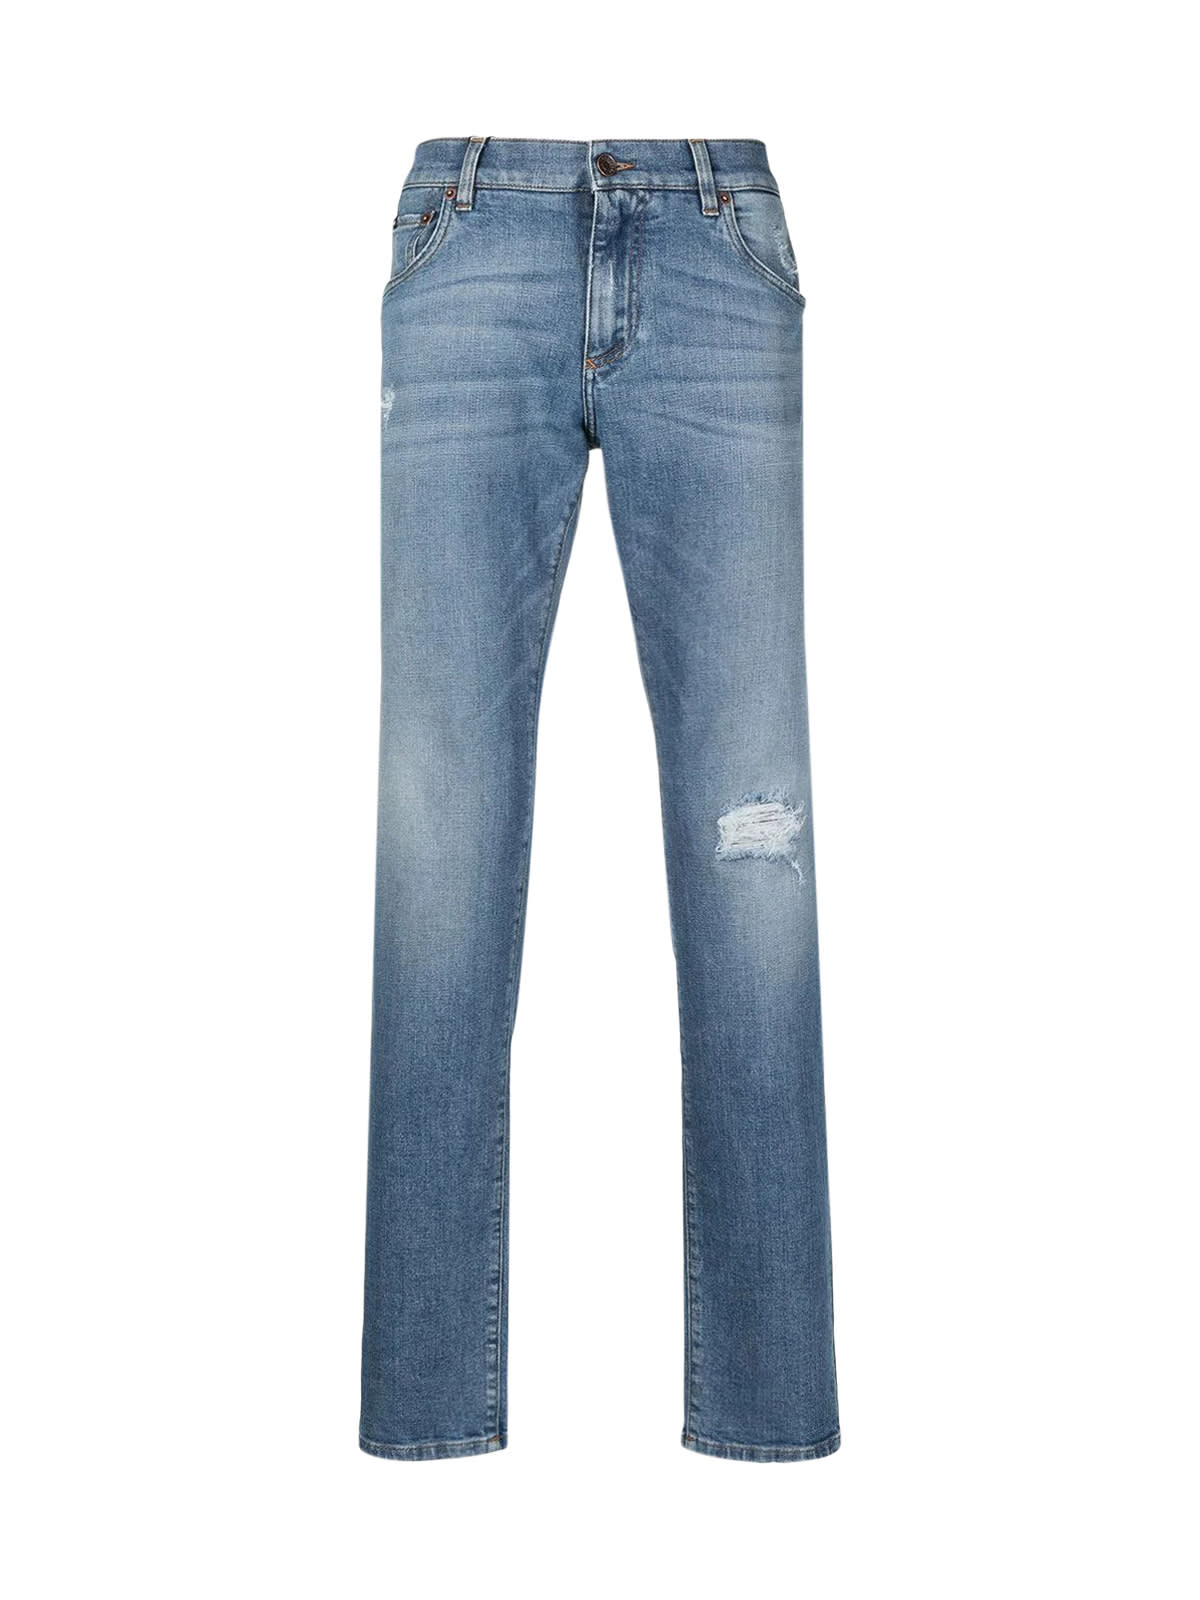 Dolce & Gabbana Pants Streight Leg Jeans